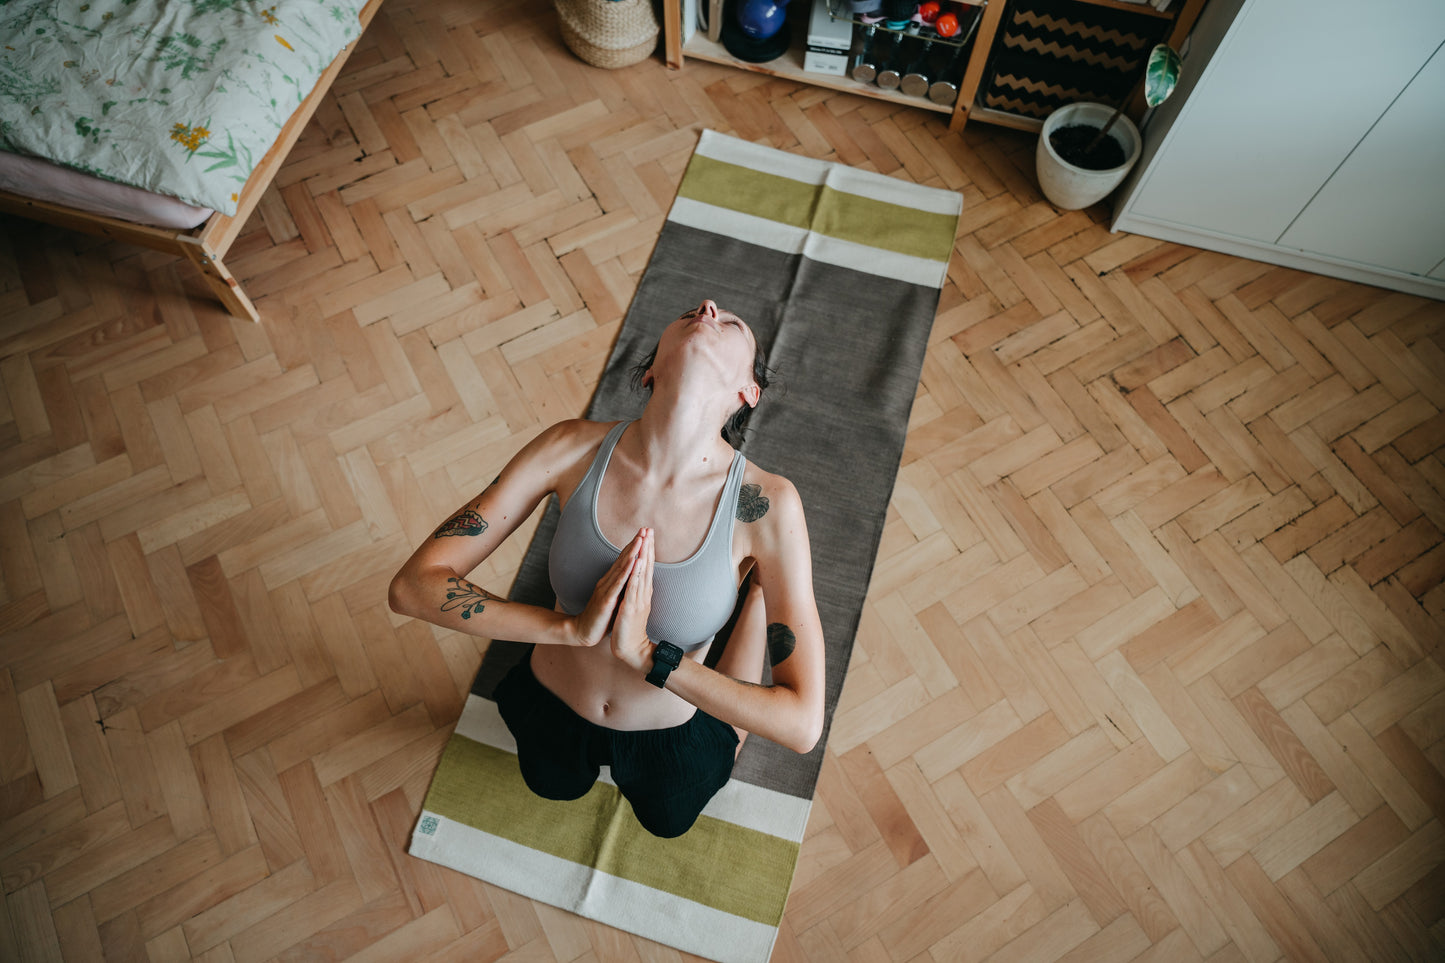 Yogi practicing ustrasana (camel pose) on cotton yoga rug on wooden floor in her room. 